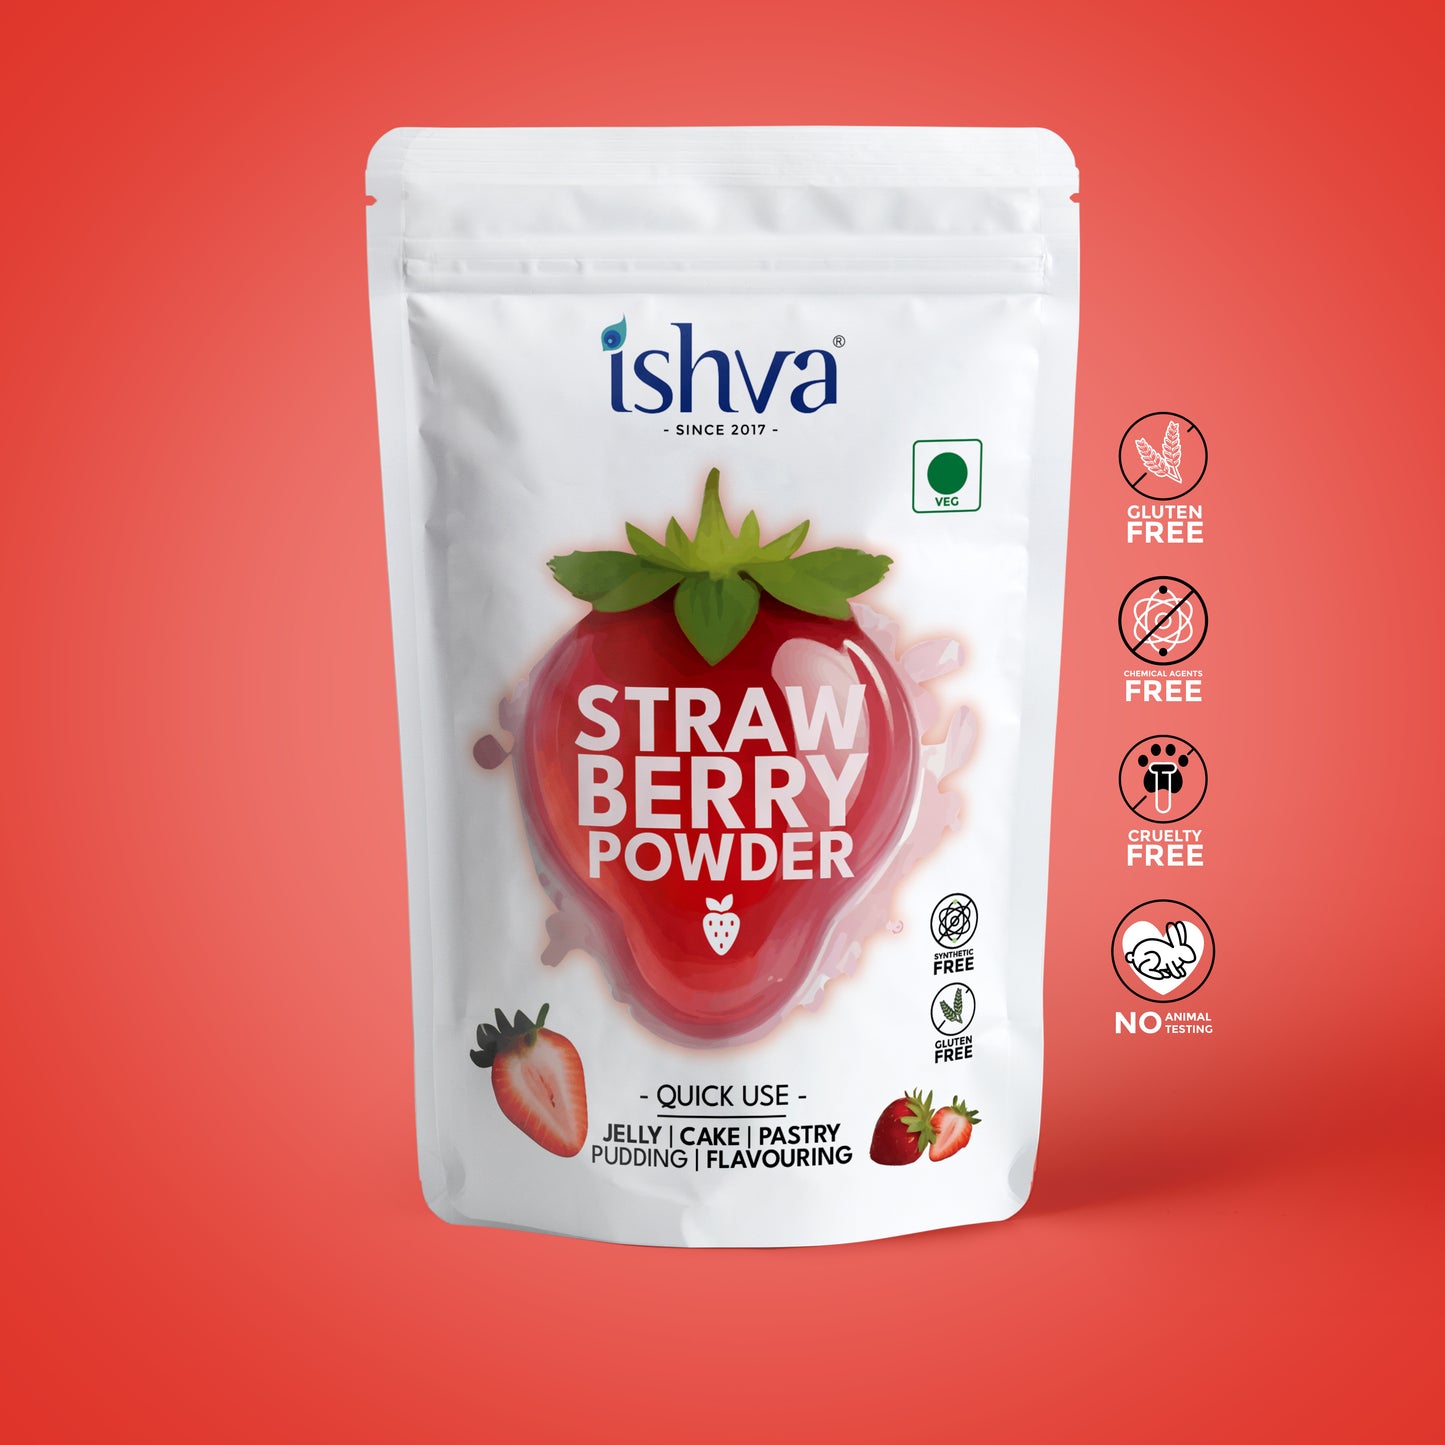 Ishva Strawberry Powder - Flavor for Jelly